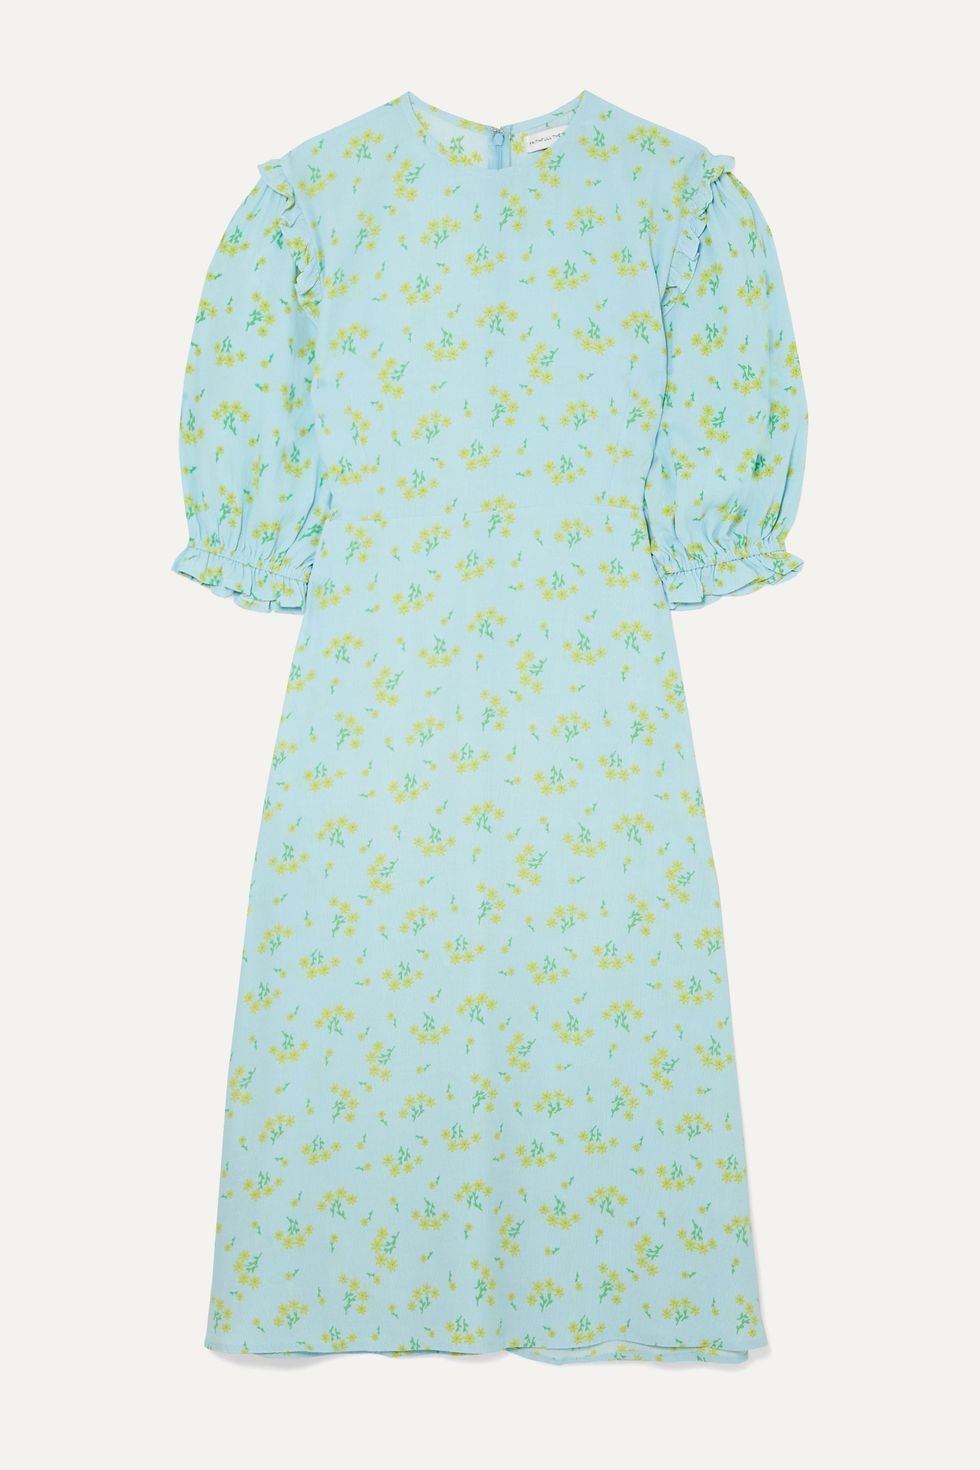 Duchess of Cambridge wears the perfect summer dress